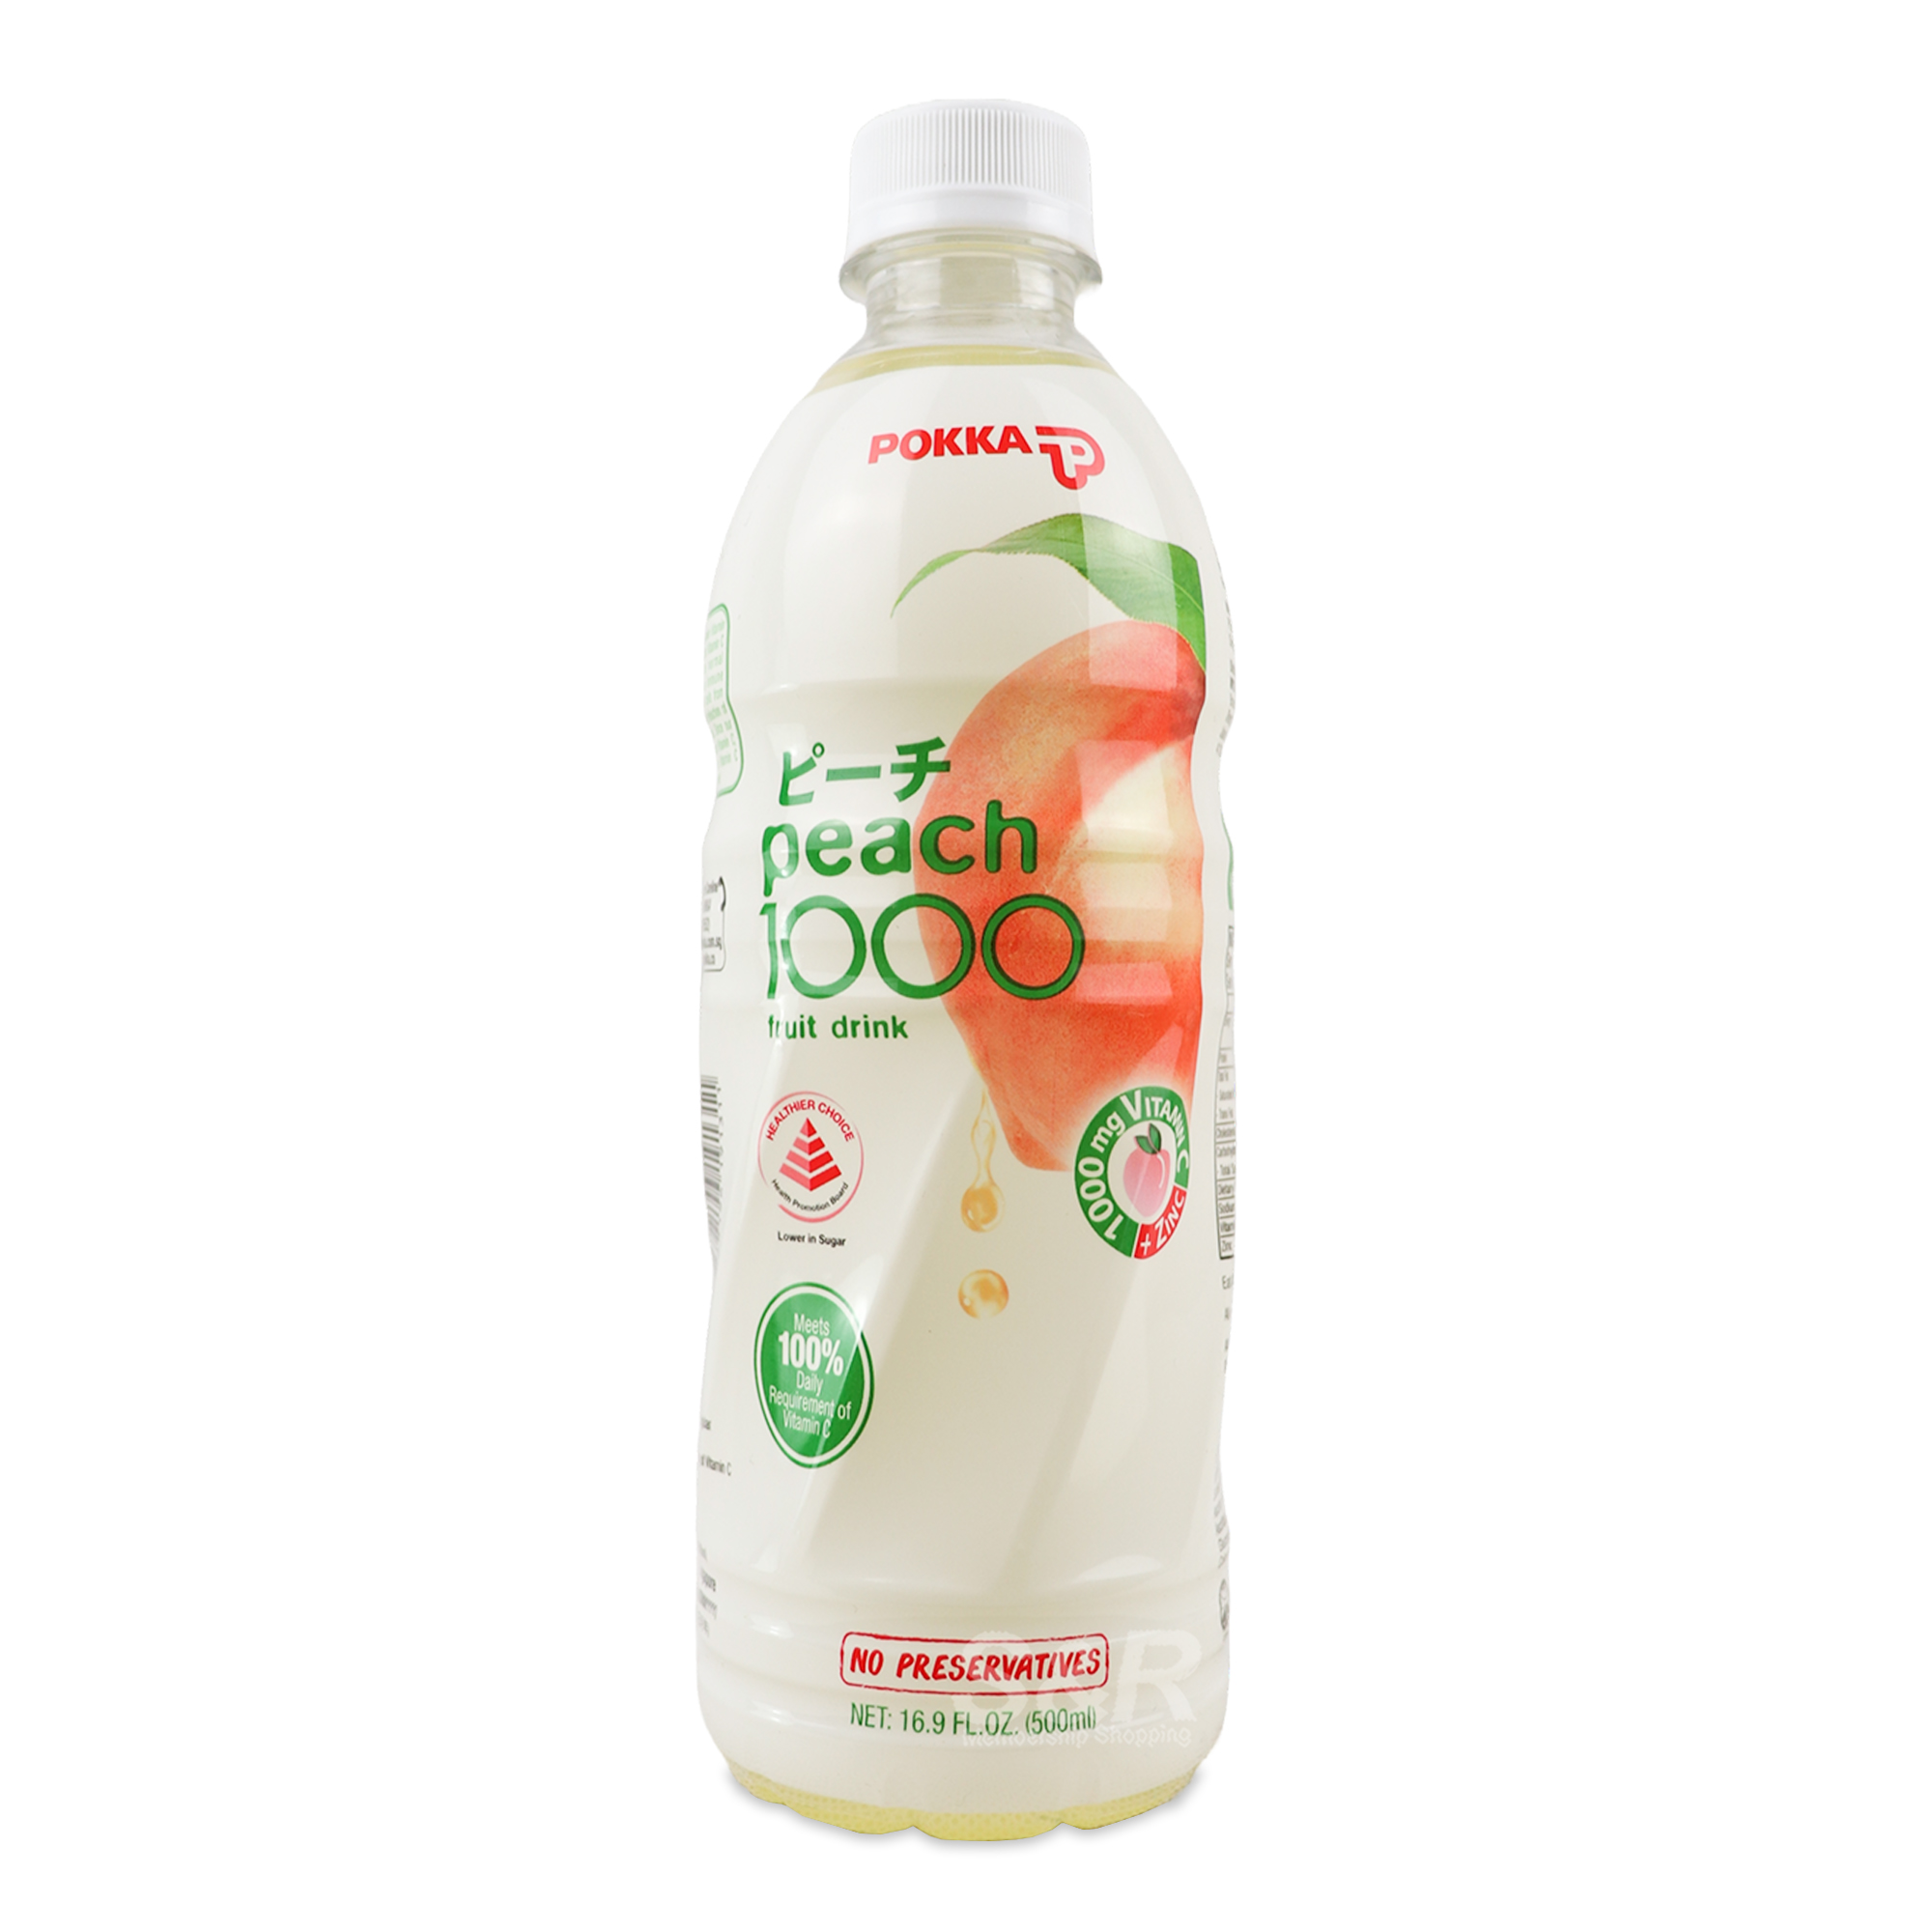 Pokka 1000 Peach Juice Drink 500mL